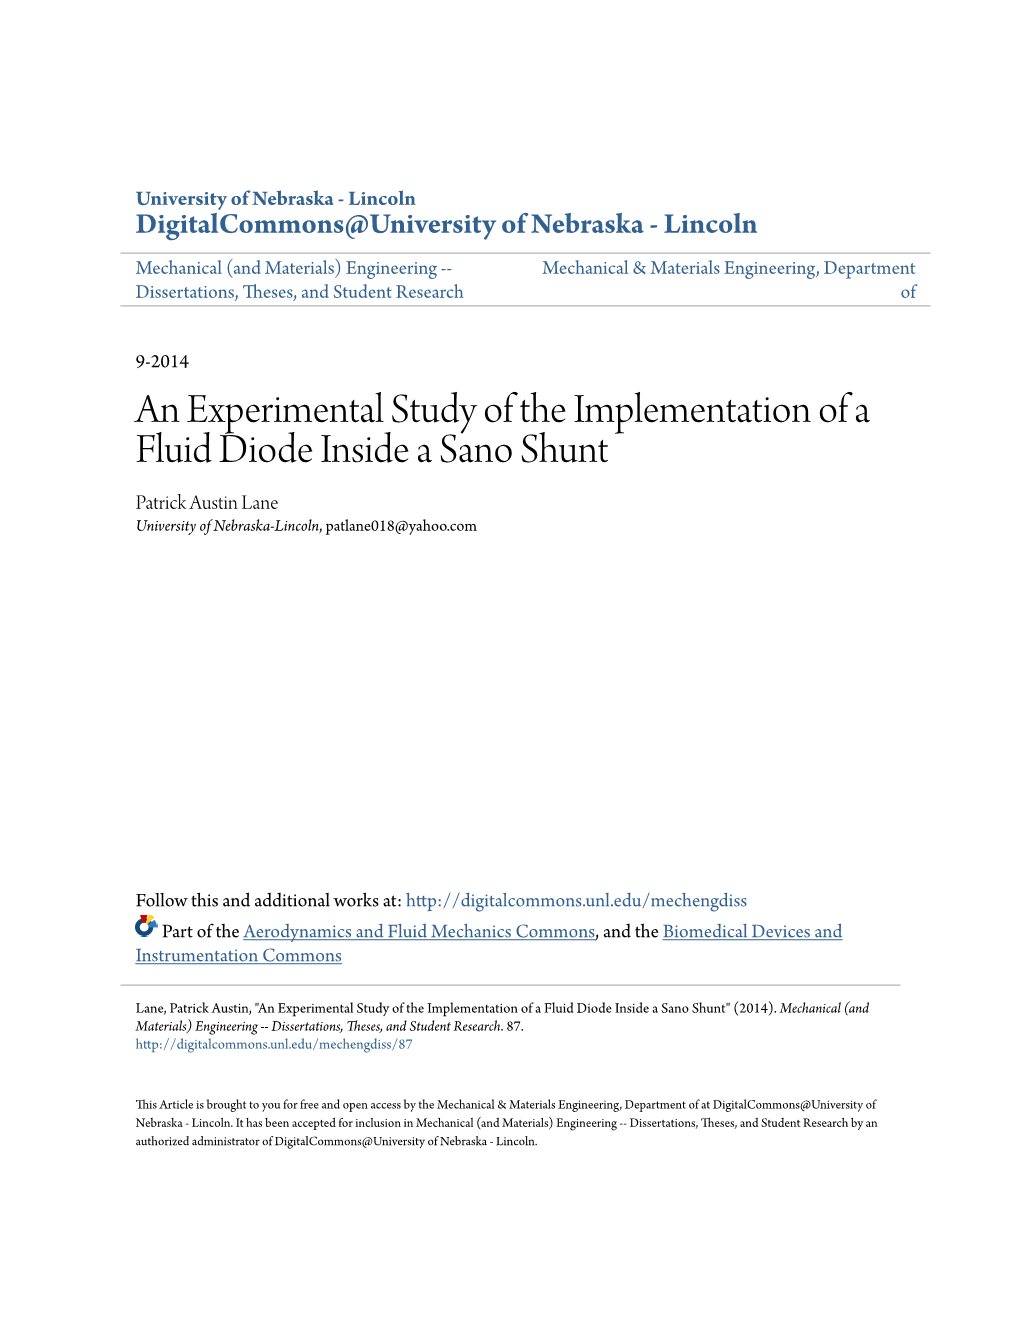 An Experimental Study of the Implementation of a Fluid Diode Inside a Sano Shunt Patrick Austin Lane University of Nebraska-Lincoln, Patlane018@Yahoo.Com